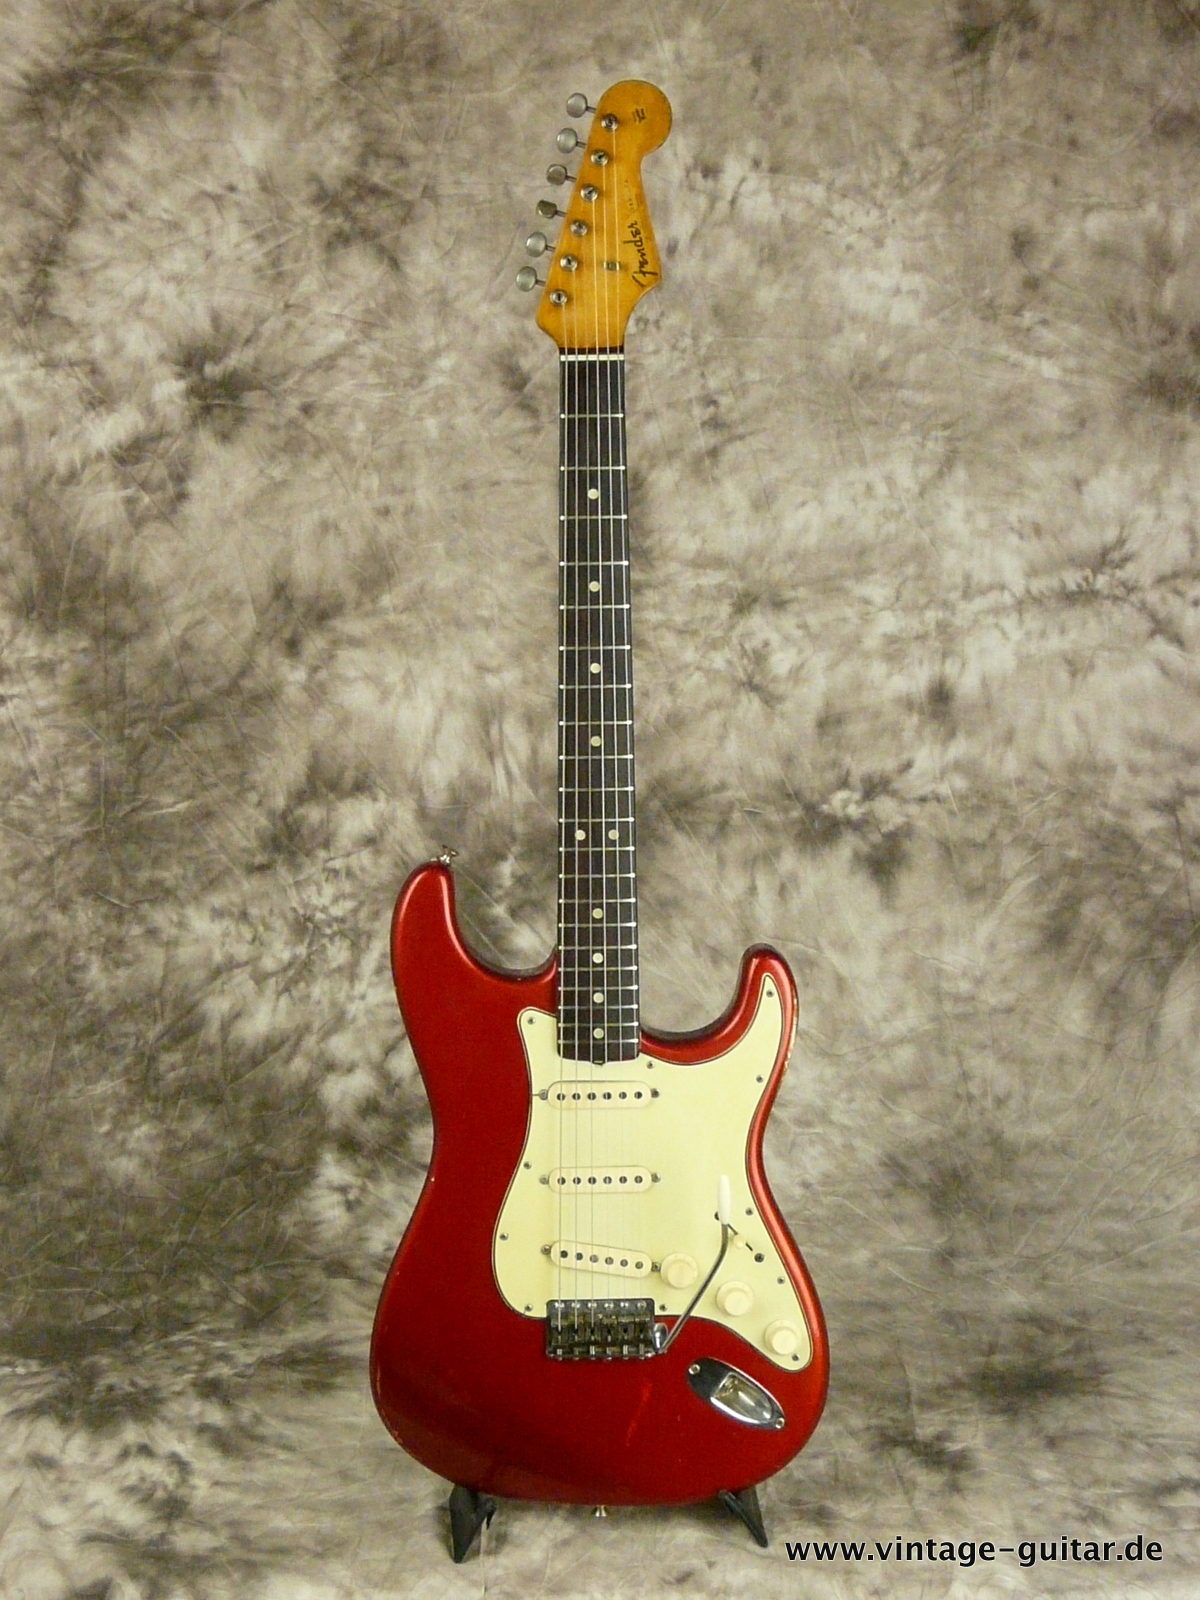 Fender_Stratocaster_candy-apple-red-1964-001.JPG